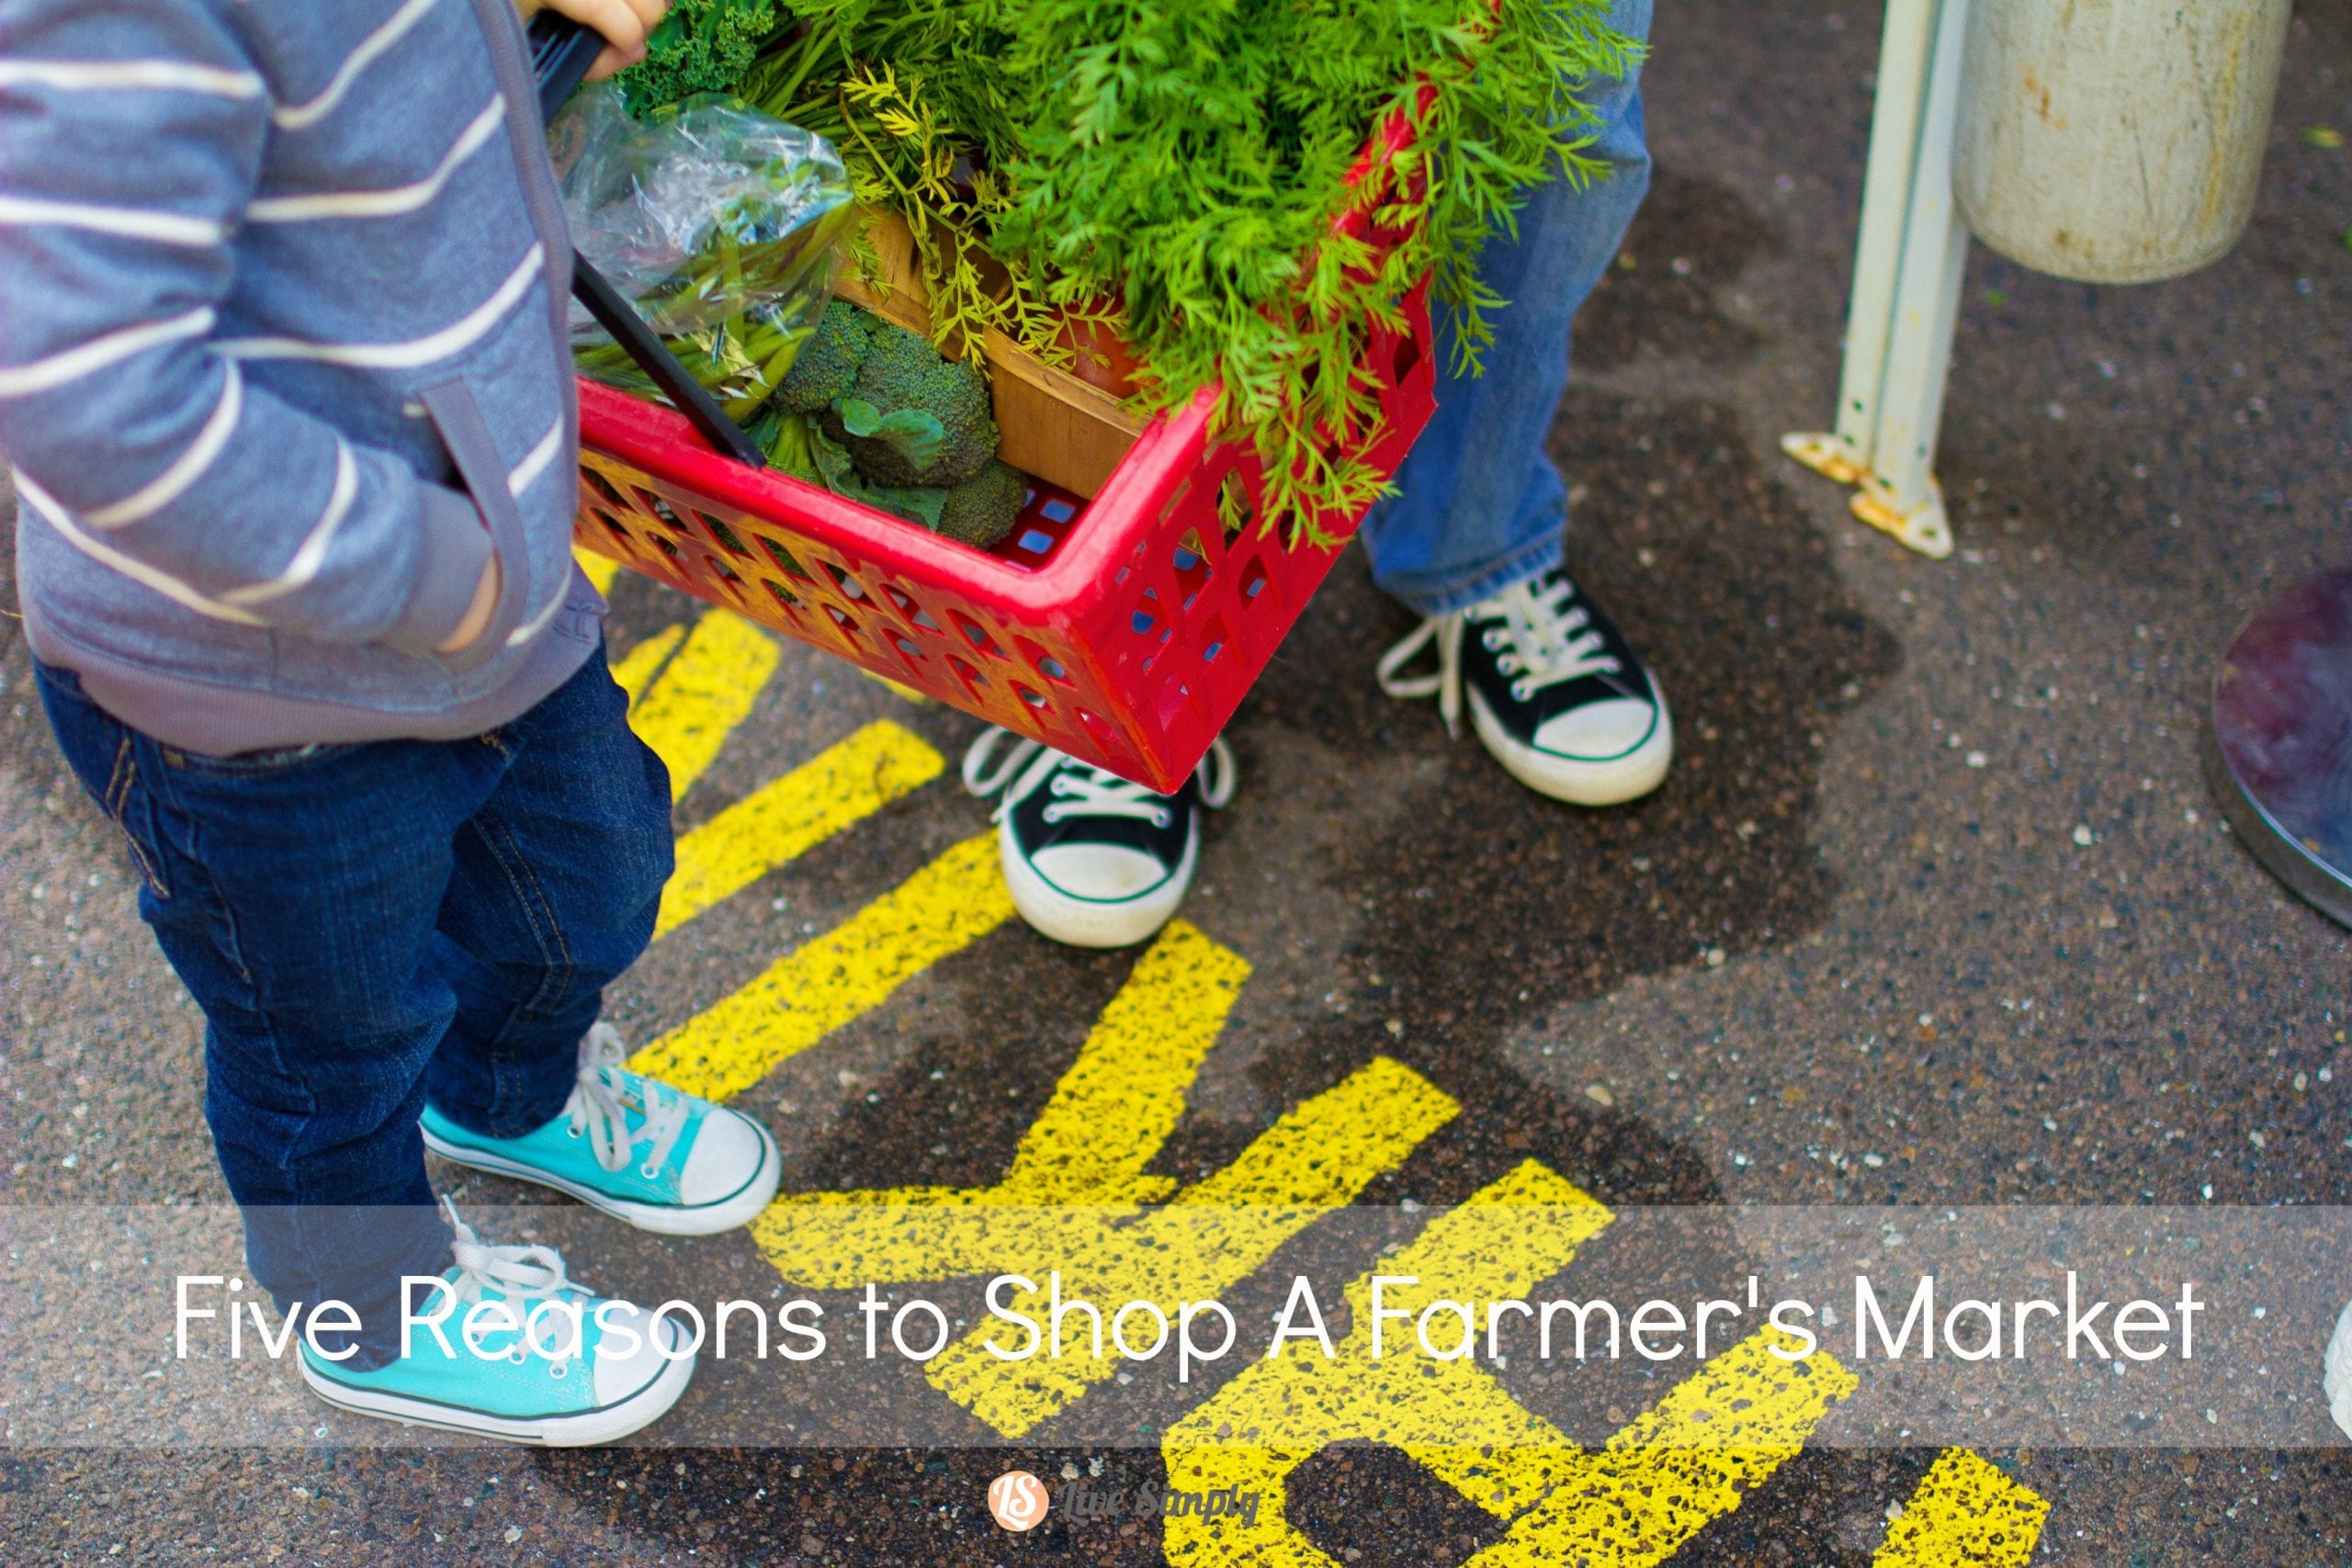 Five Reasons to Shop a Farmer’s Market